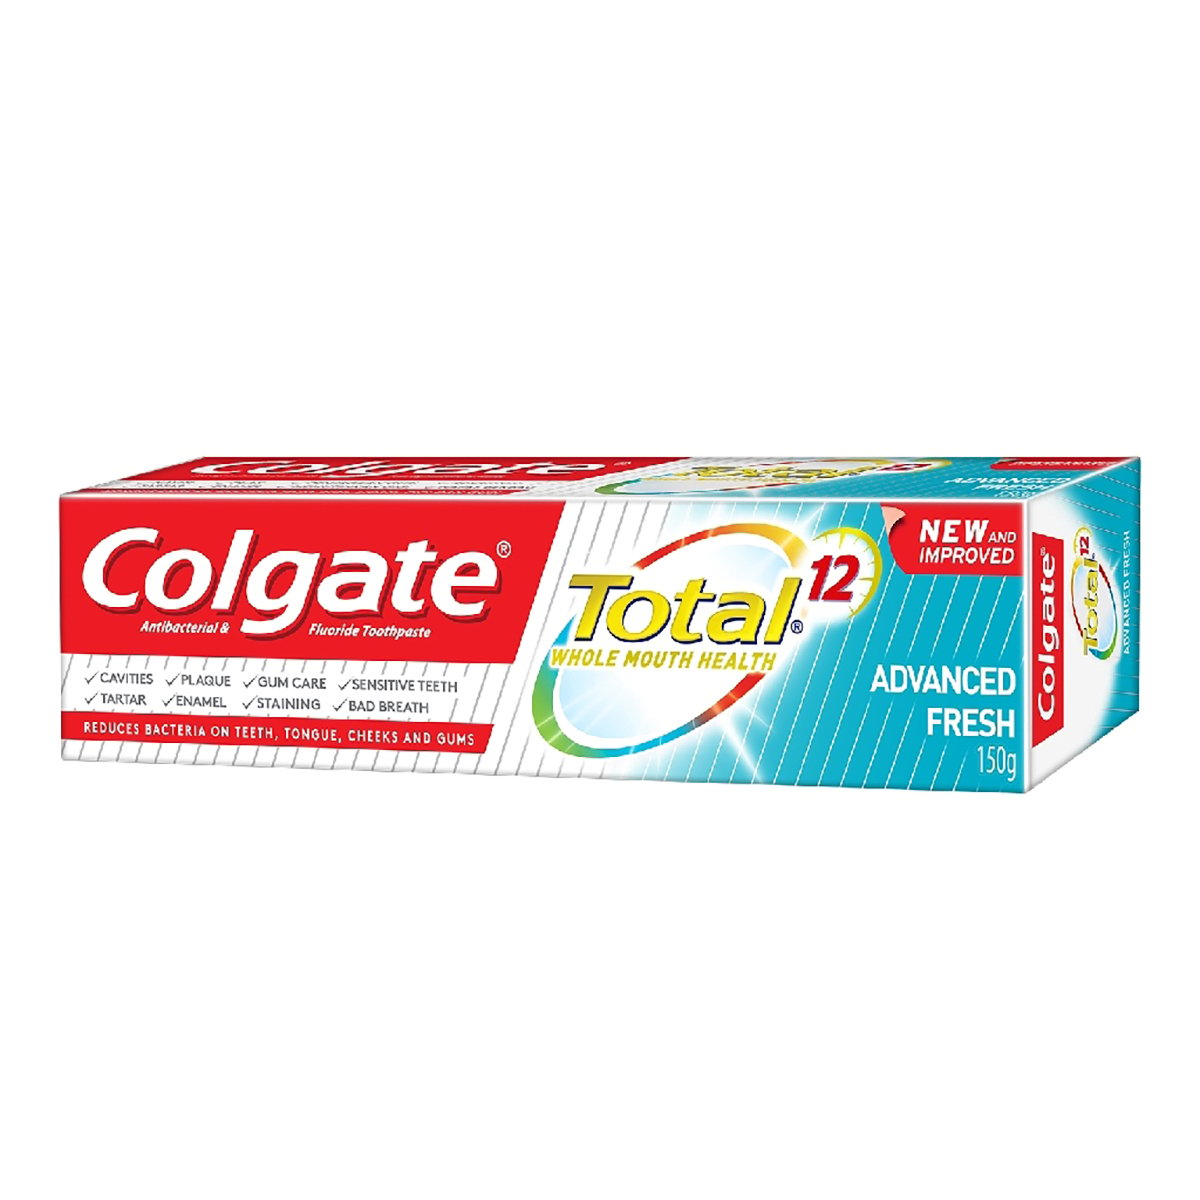 Colgate Toothpaste Total Advanced Fresh 150g